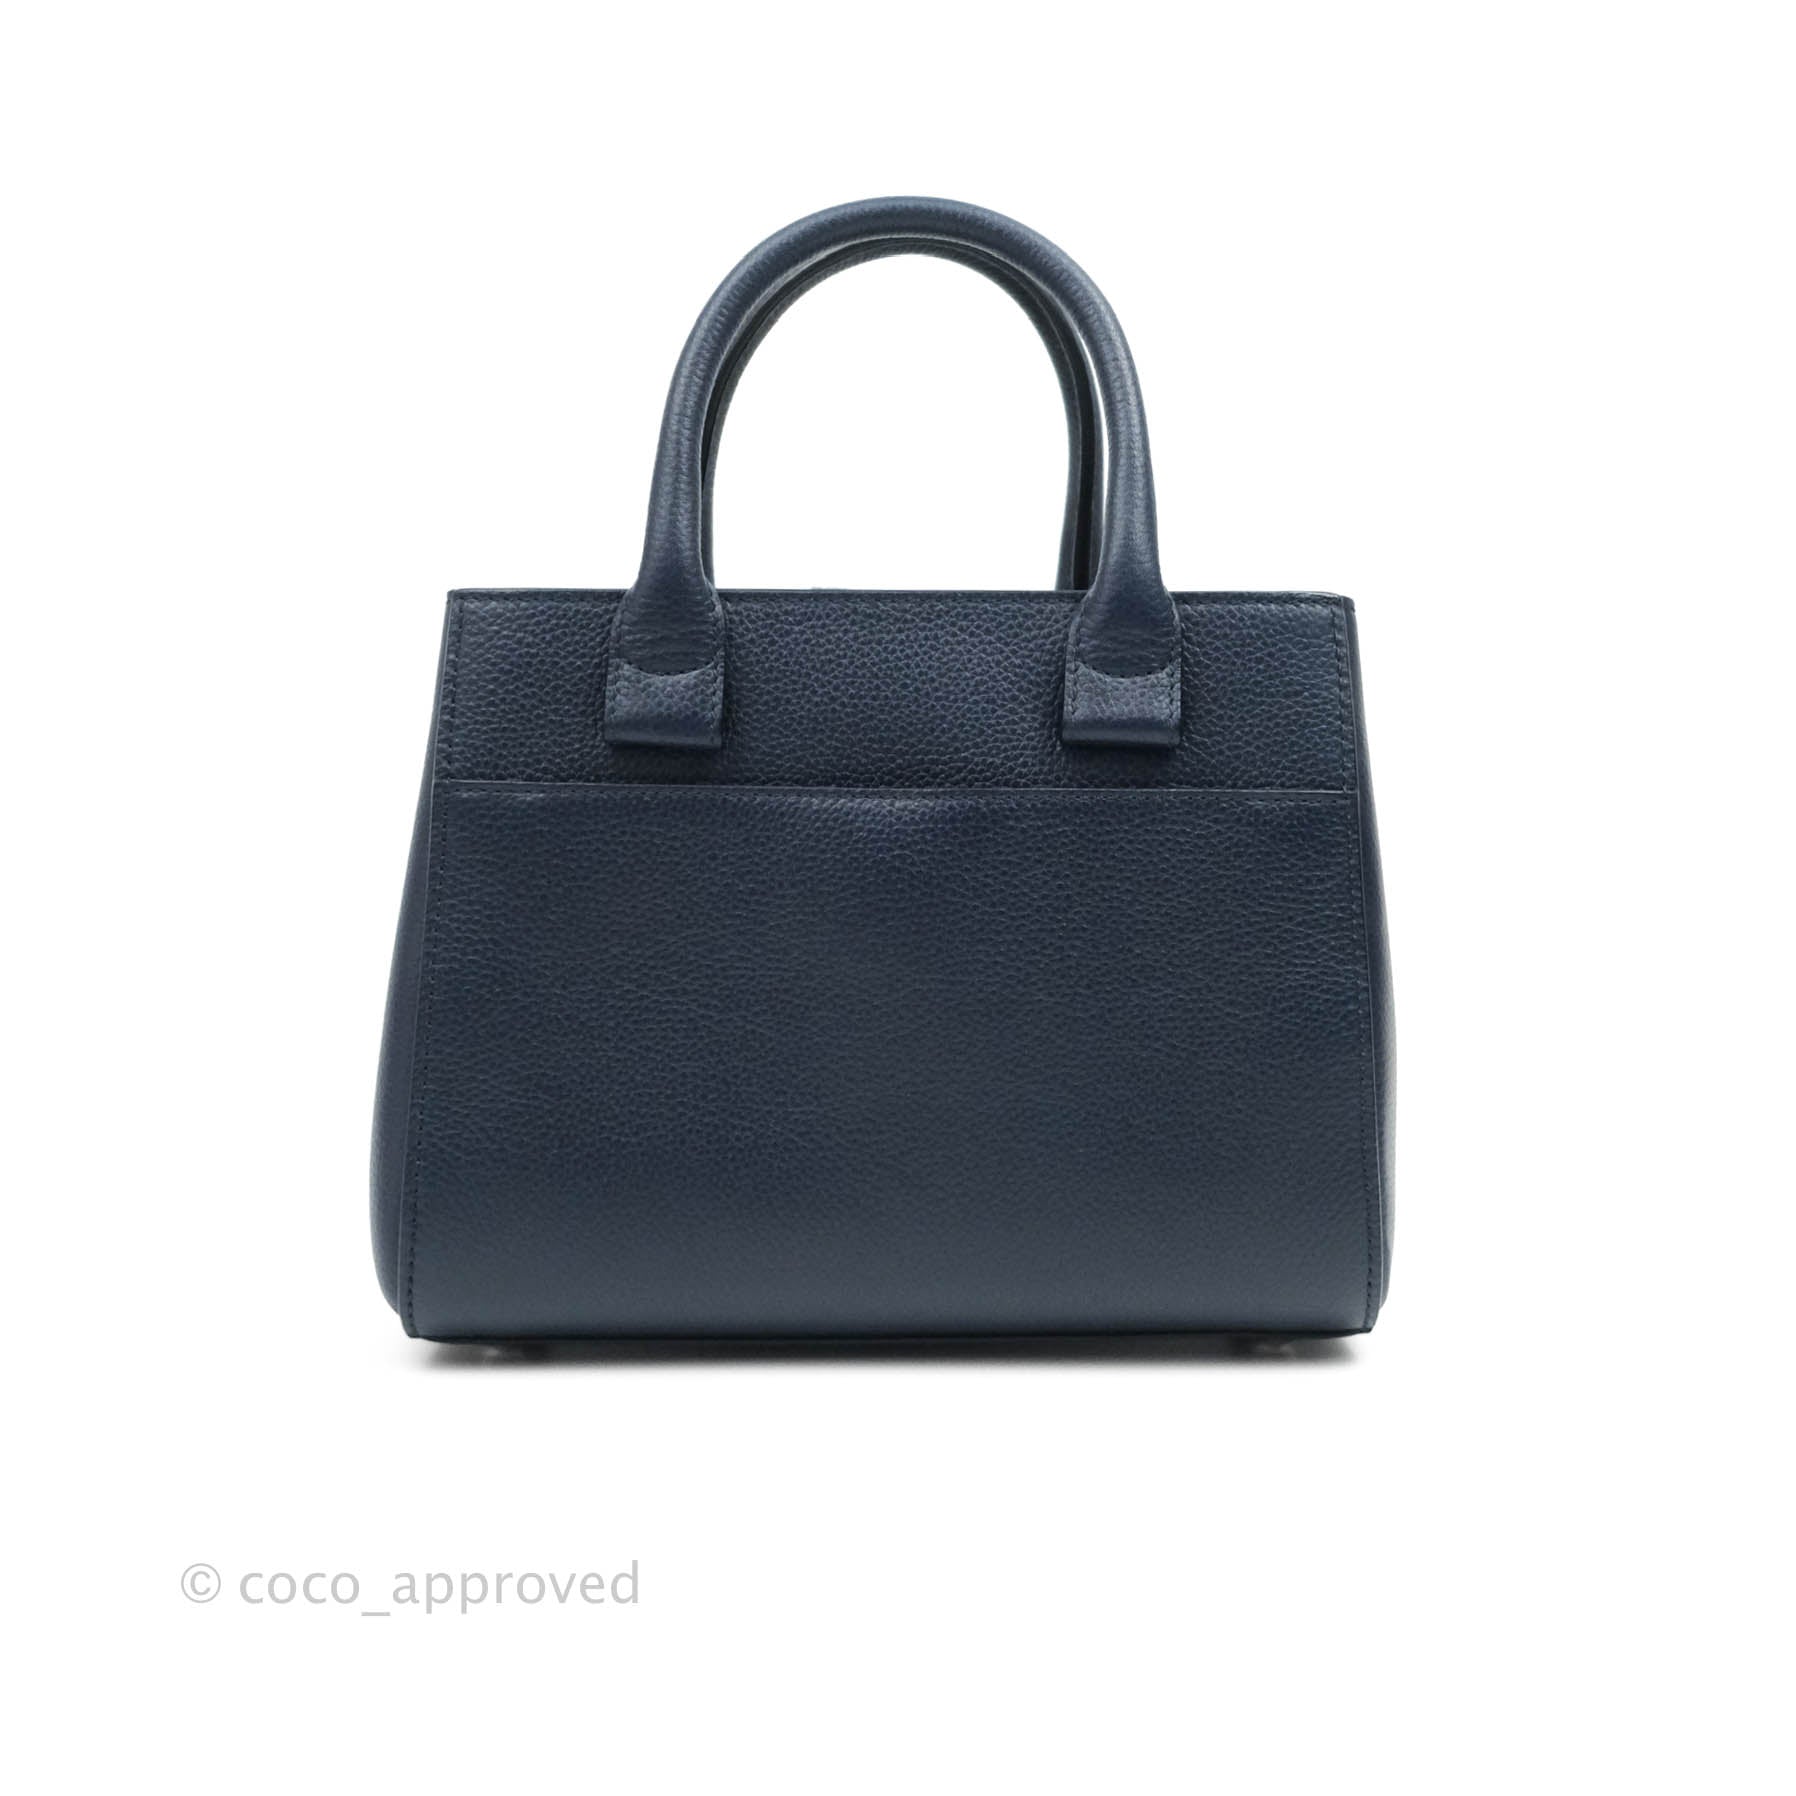 Chanel Small Neo Executive Tote - Neutrals Totes, Handbags